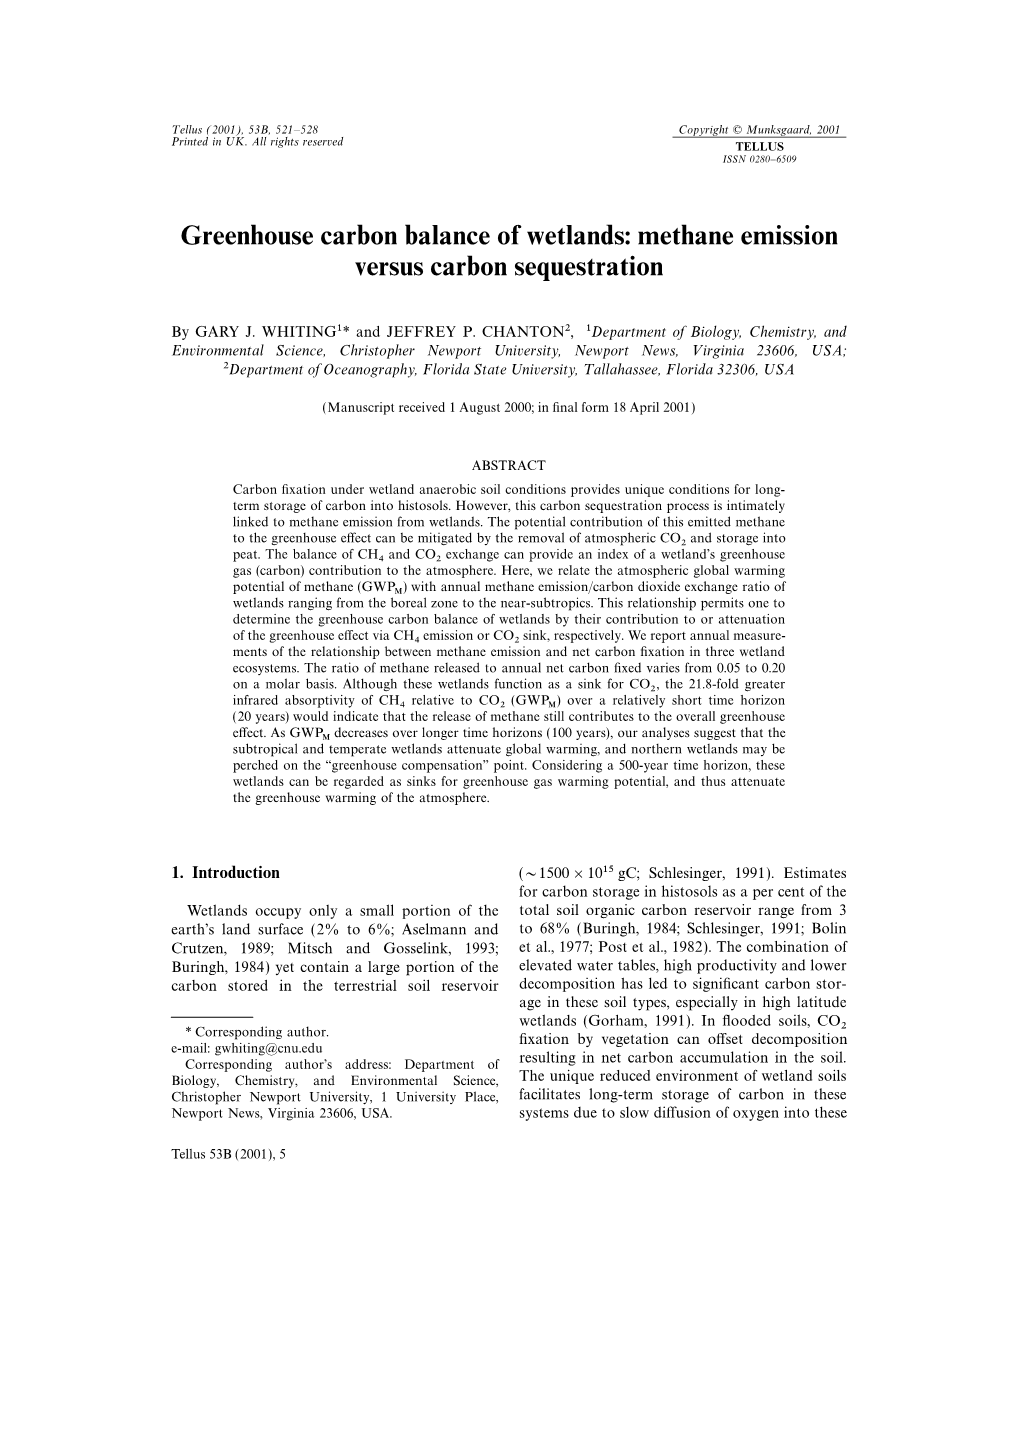 Greenhouse Carbon Balance of Wetlands: Methane Emission Versus Carbon Sequestration